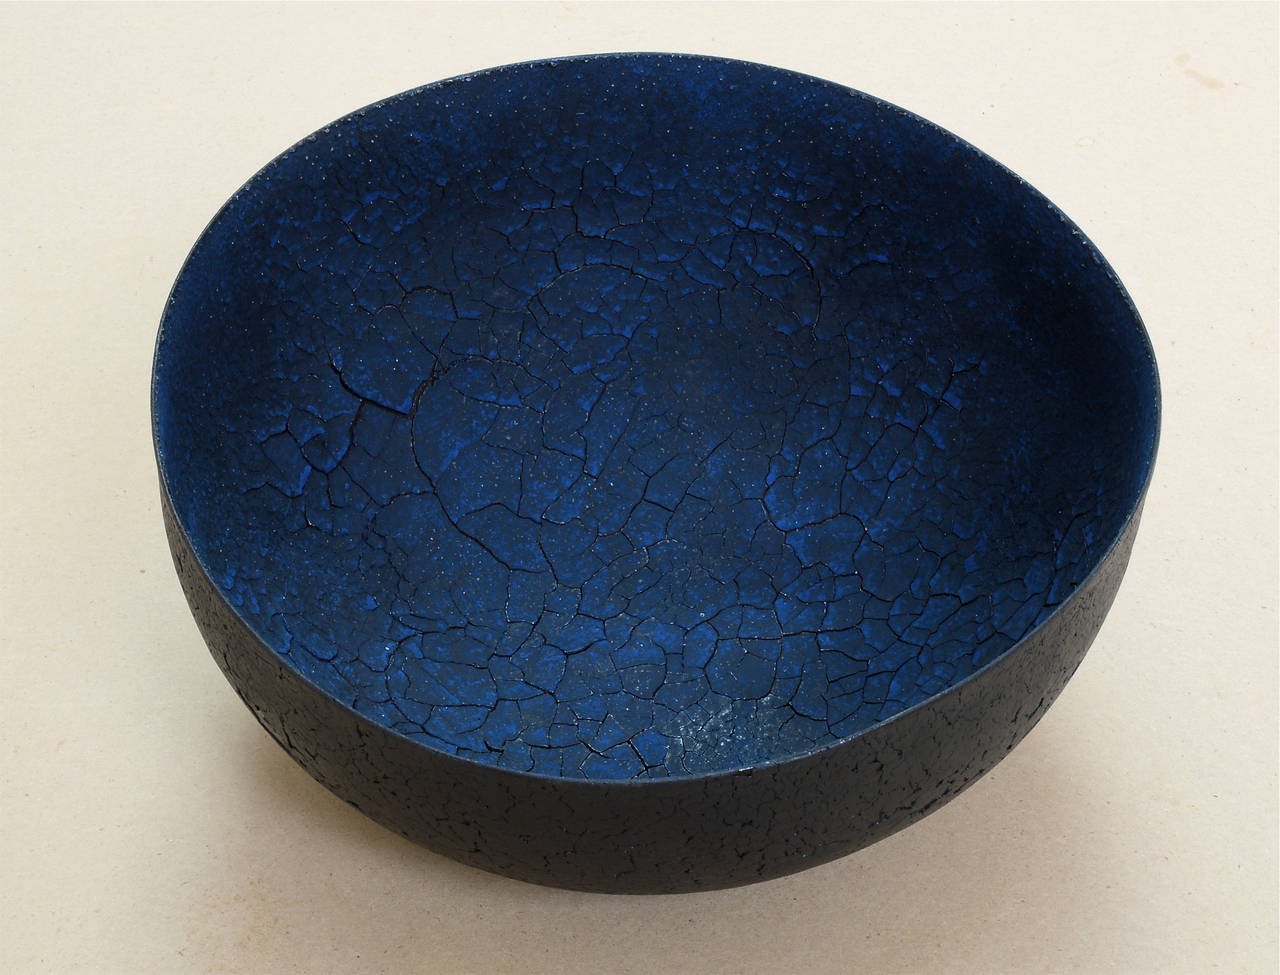 Steven Heinemann Abstract Sculpture - Untitled (Blue Bowl) - rich, textured, nature inspired, ceramic bowl vessel